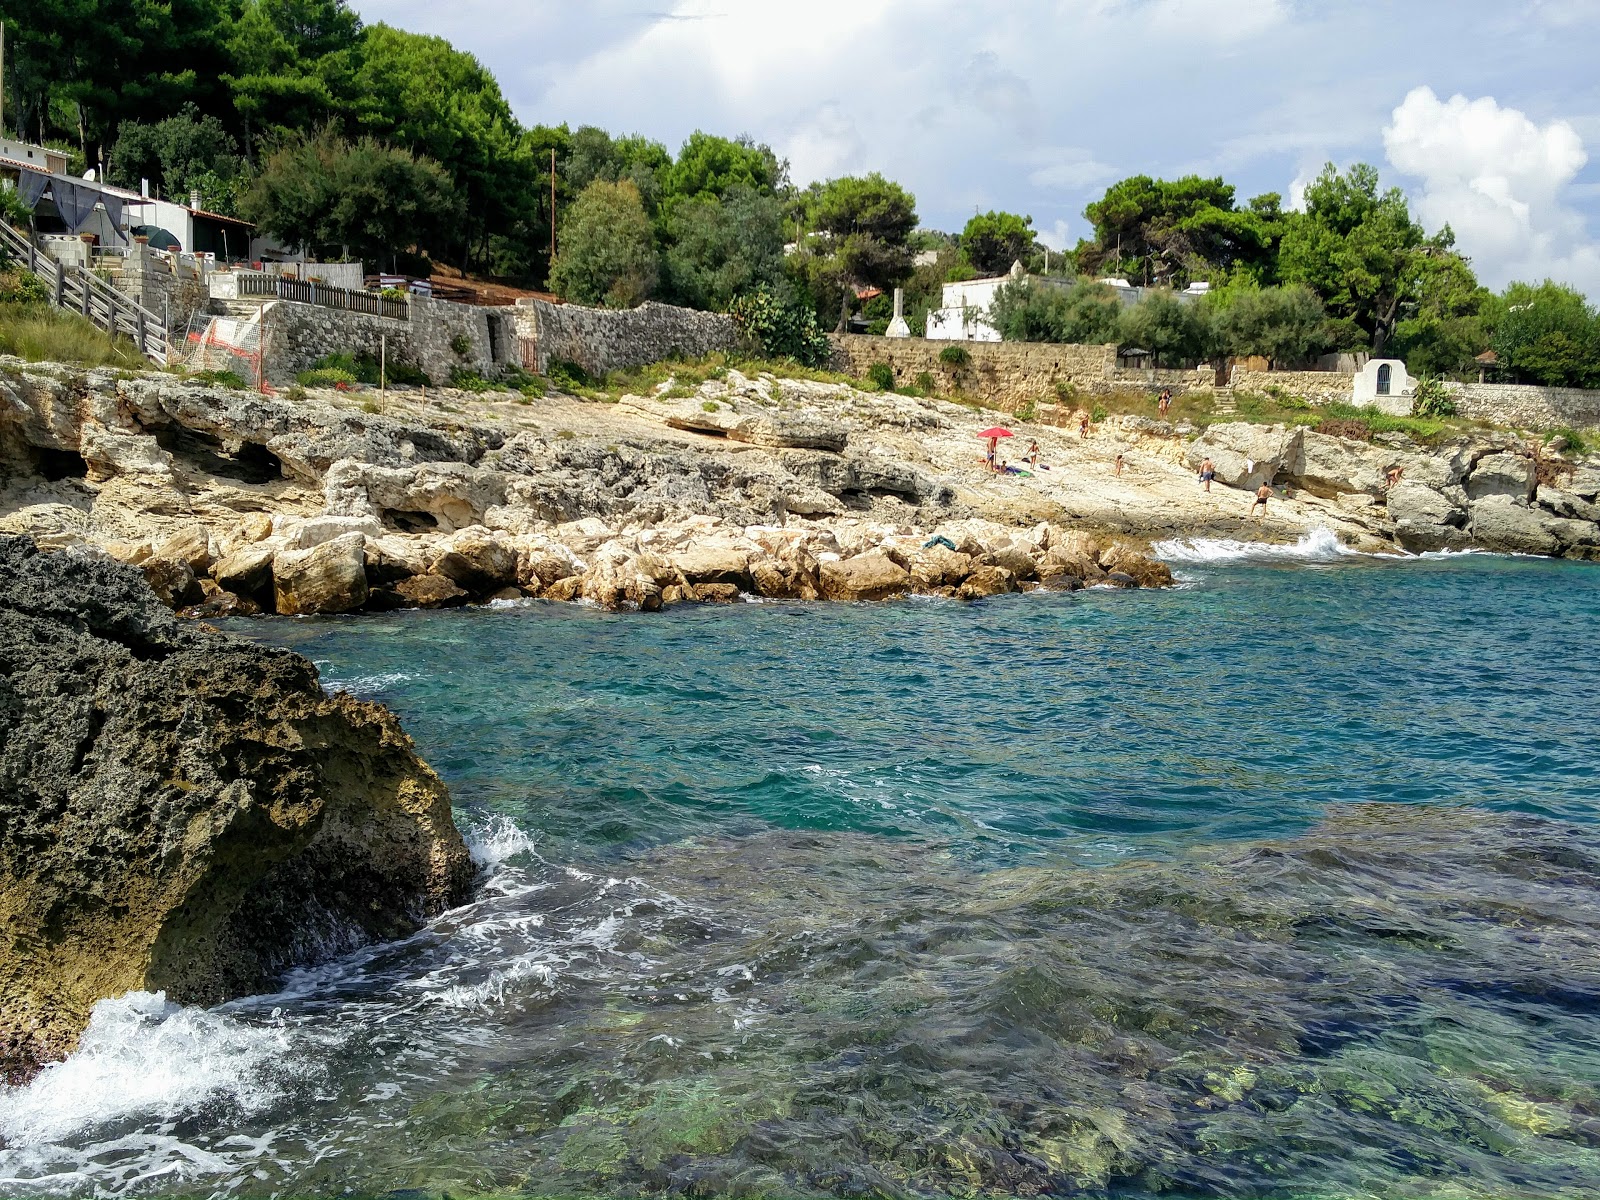 Foto von Spiaggia di Chianca Liscia befindet sich in natürlicher umgebung